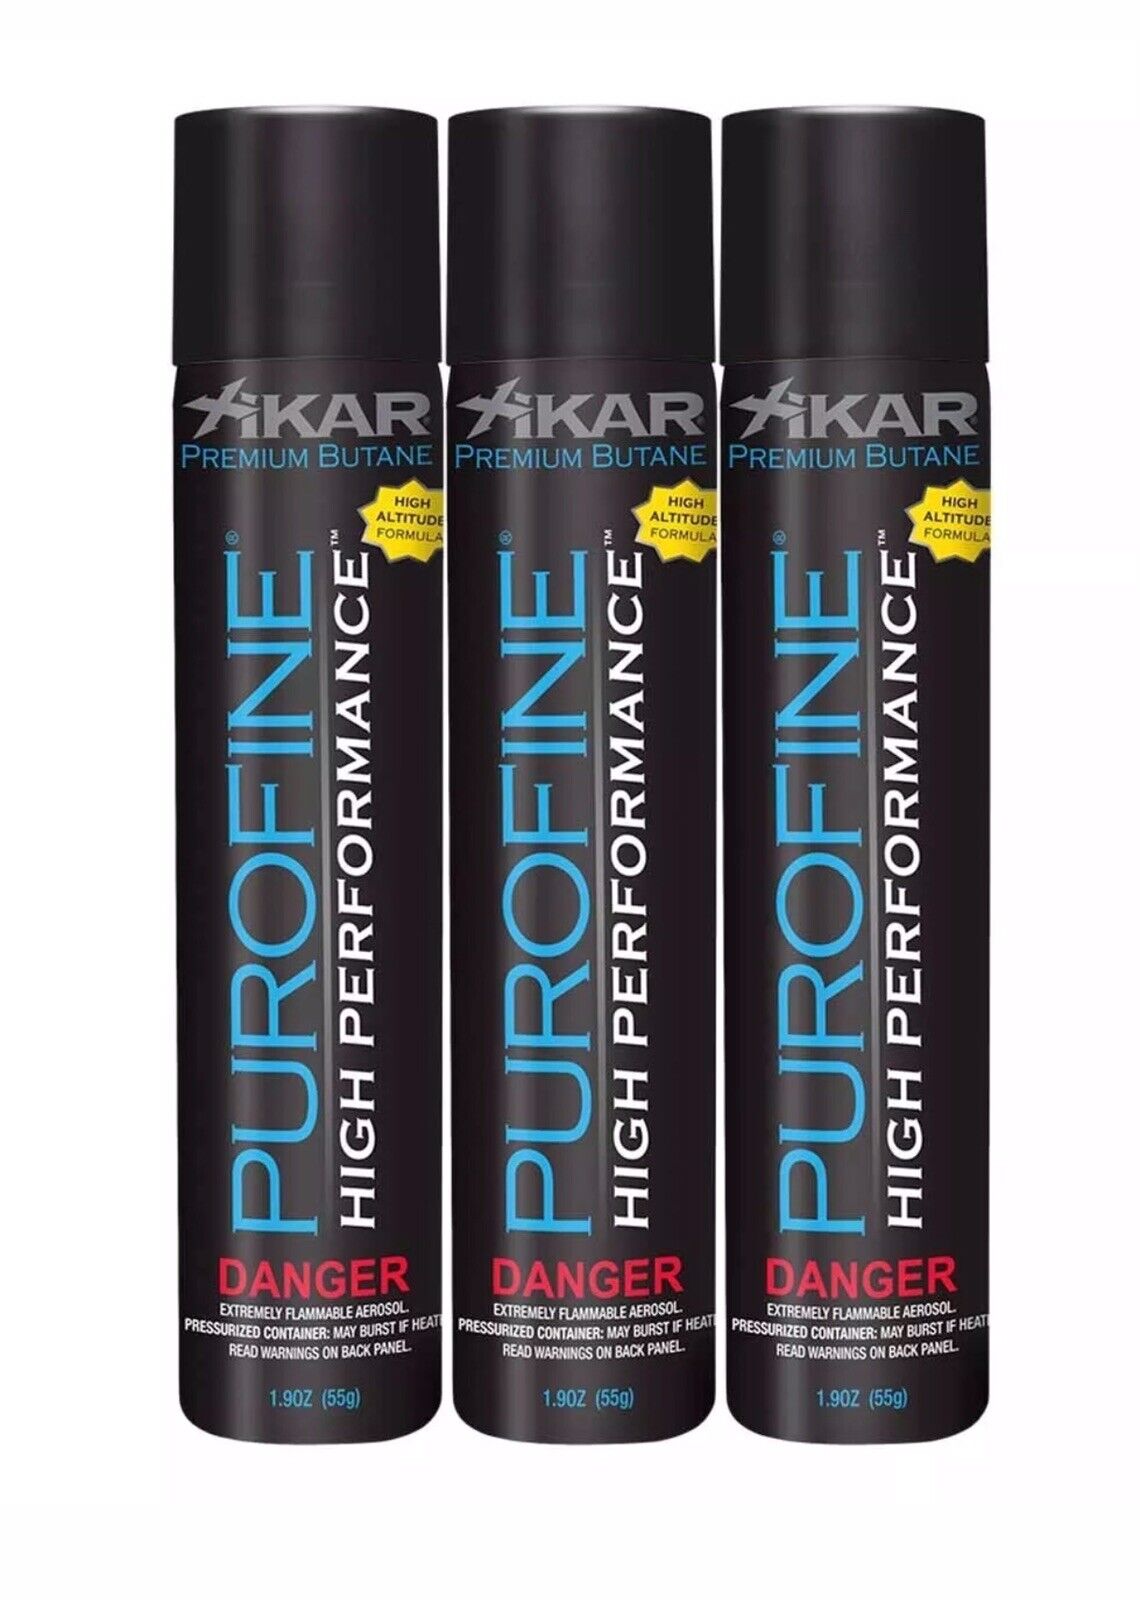 XiKAR Premium Butane Lighter Fuel Refill High Performance Altitude 1.9 oz 3 Pack